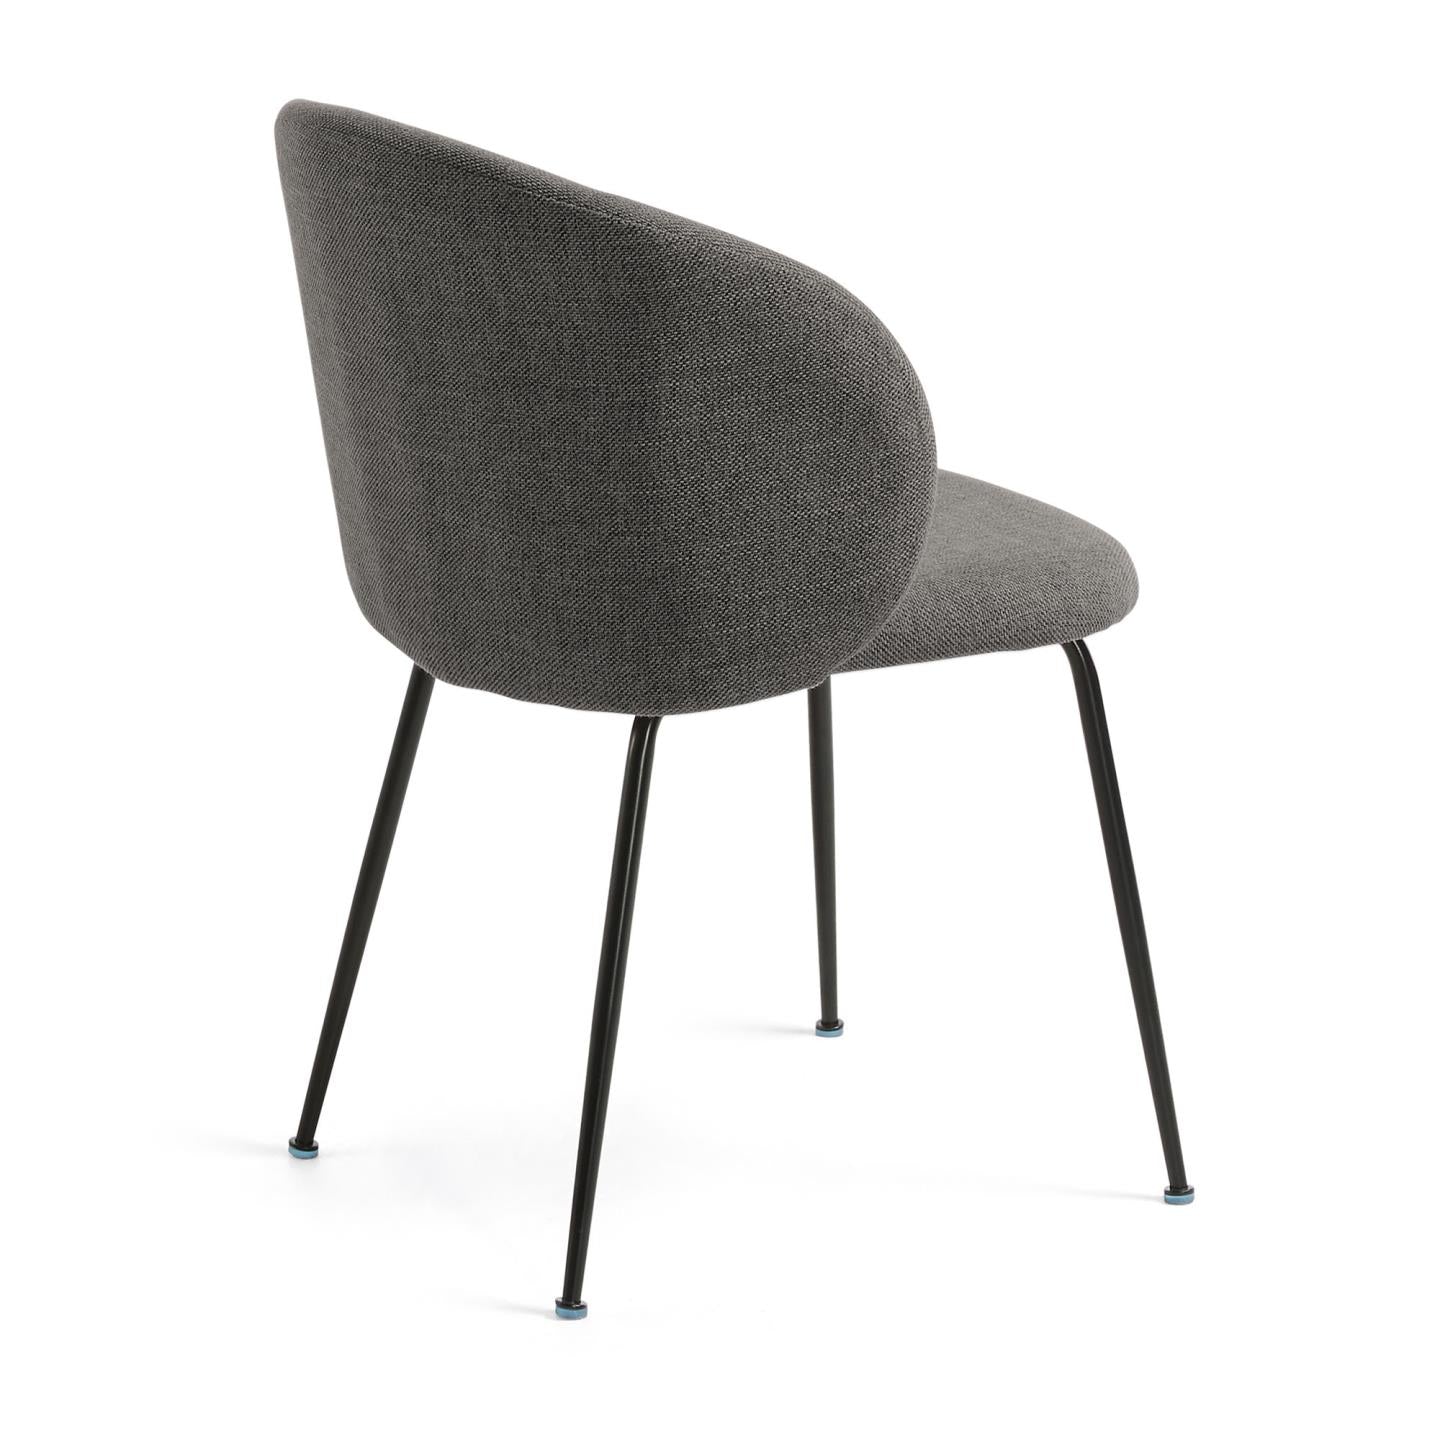 Minna dark grey chair with steel legs with black finish